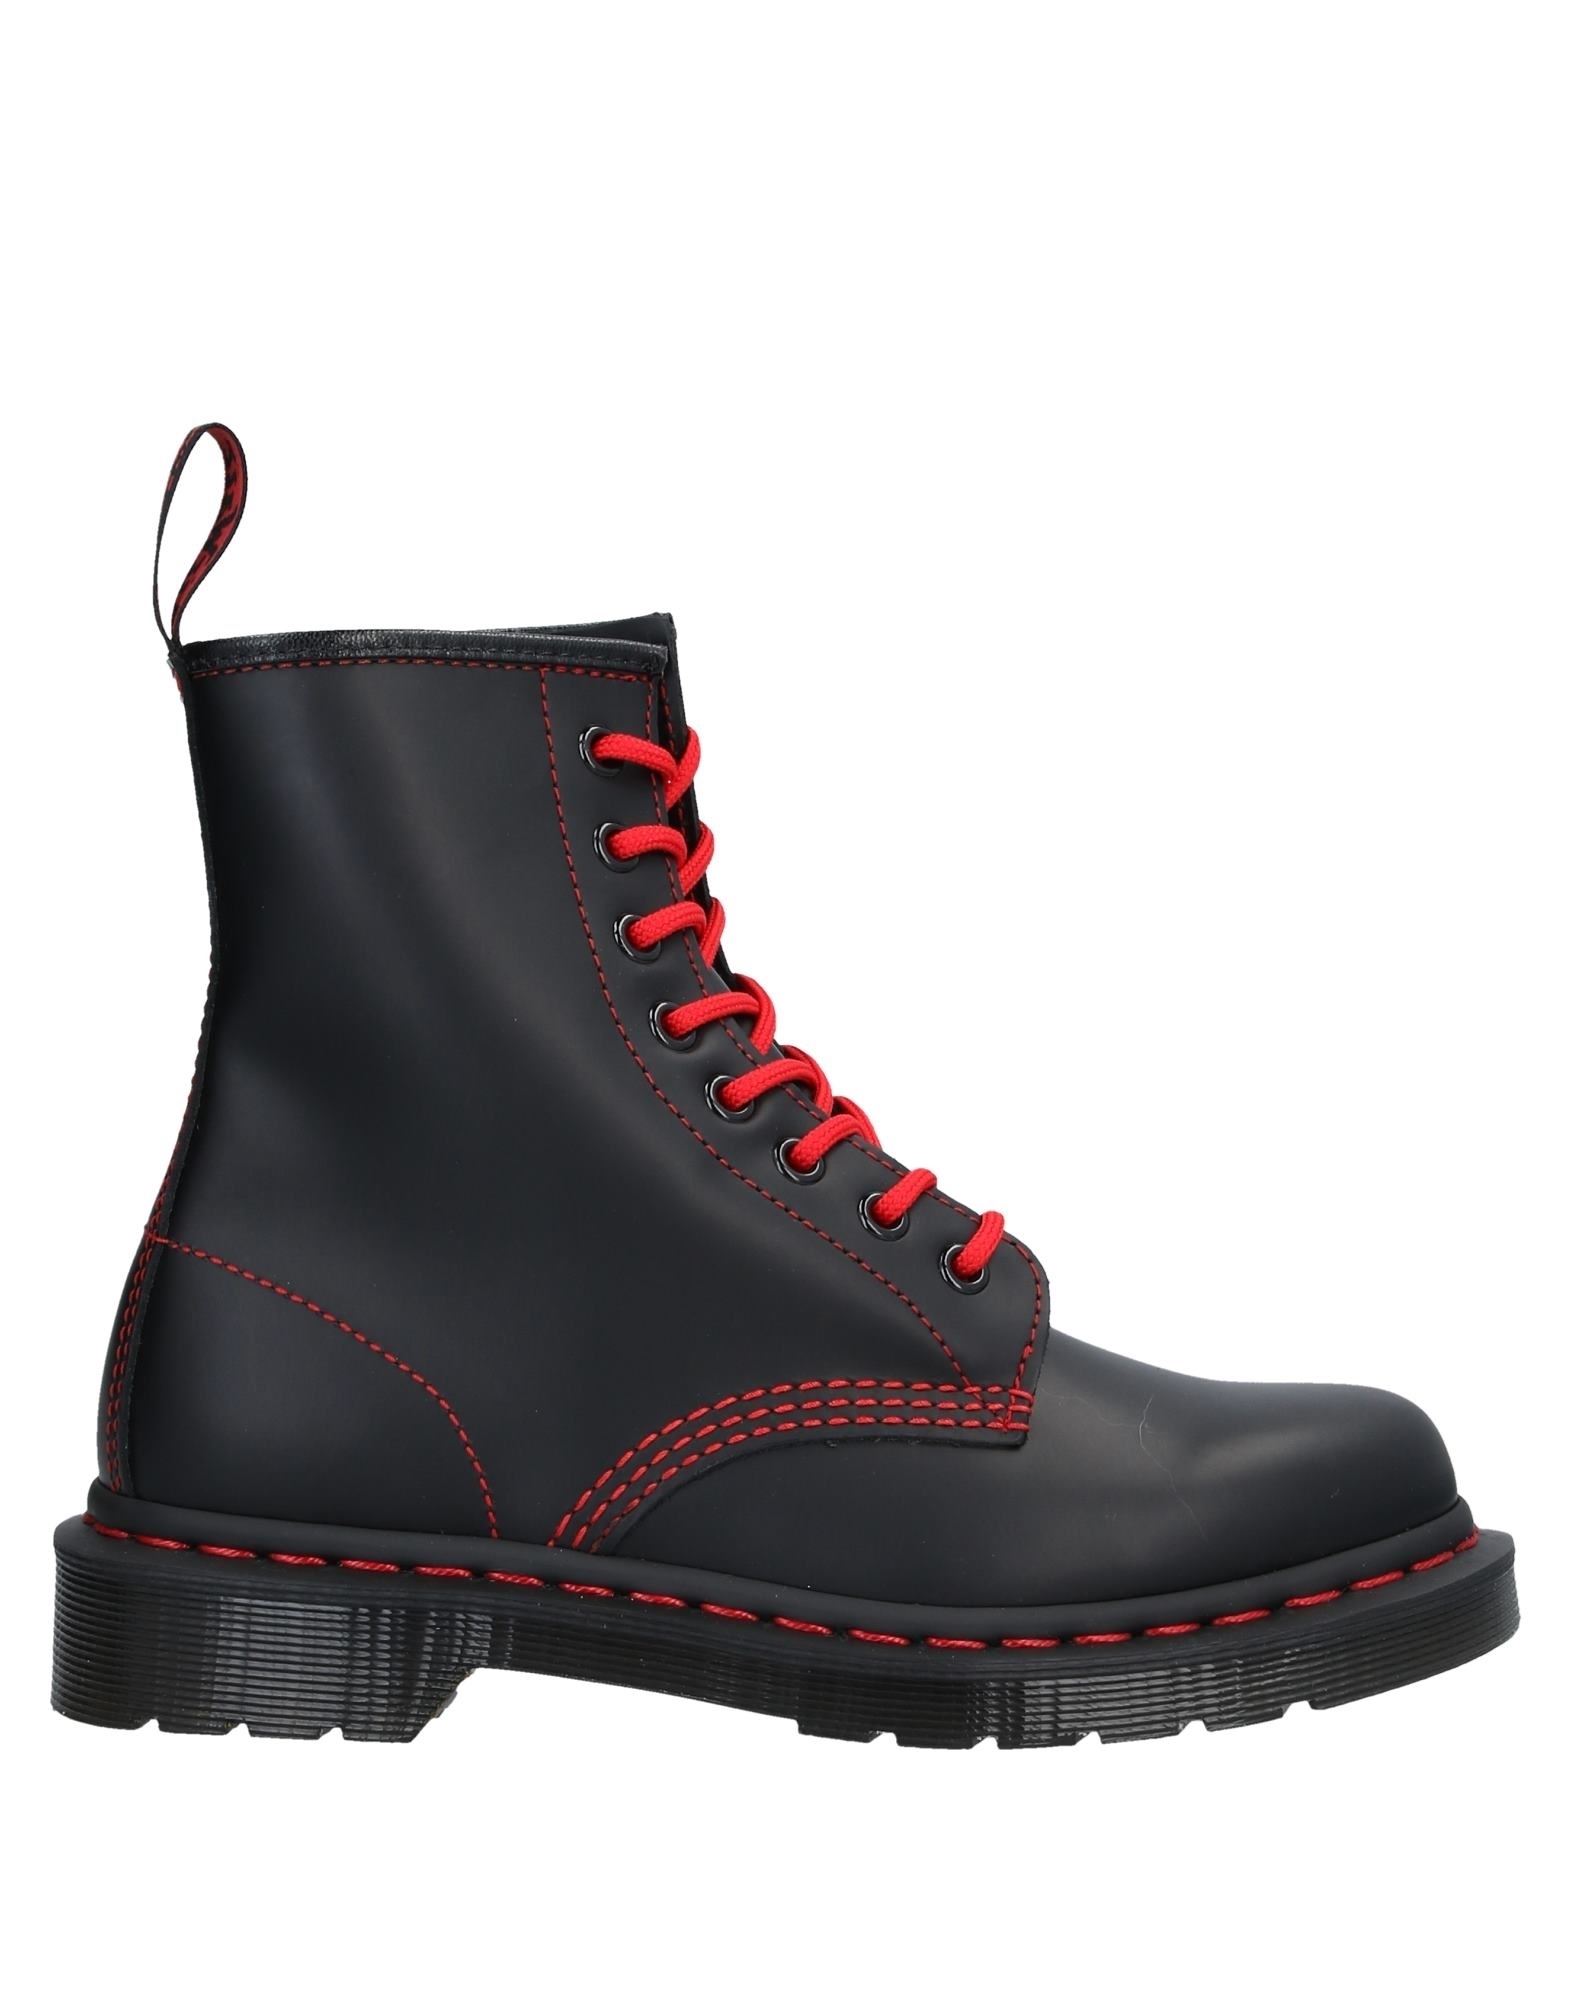 DR. MARTENS Ankle boots - Item 11964448